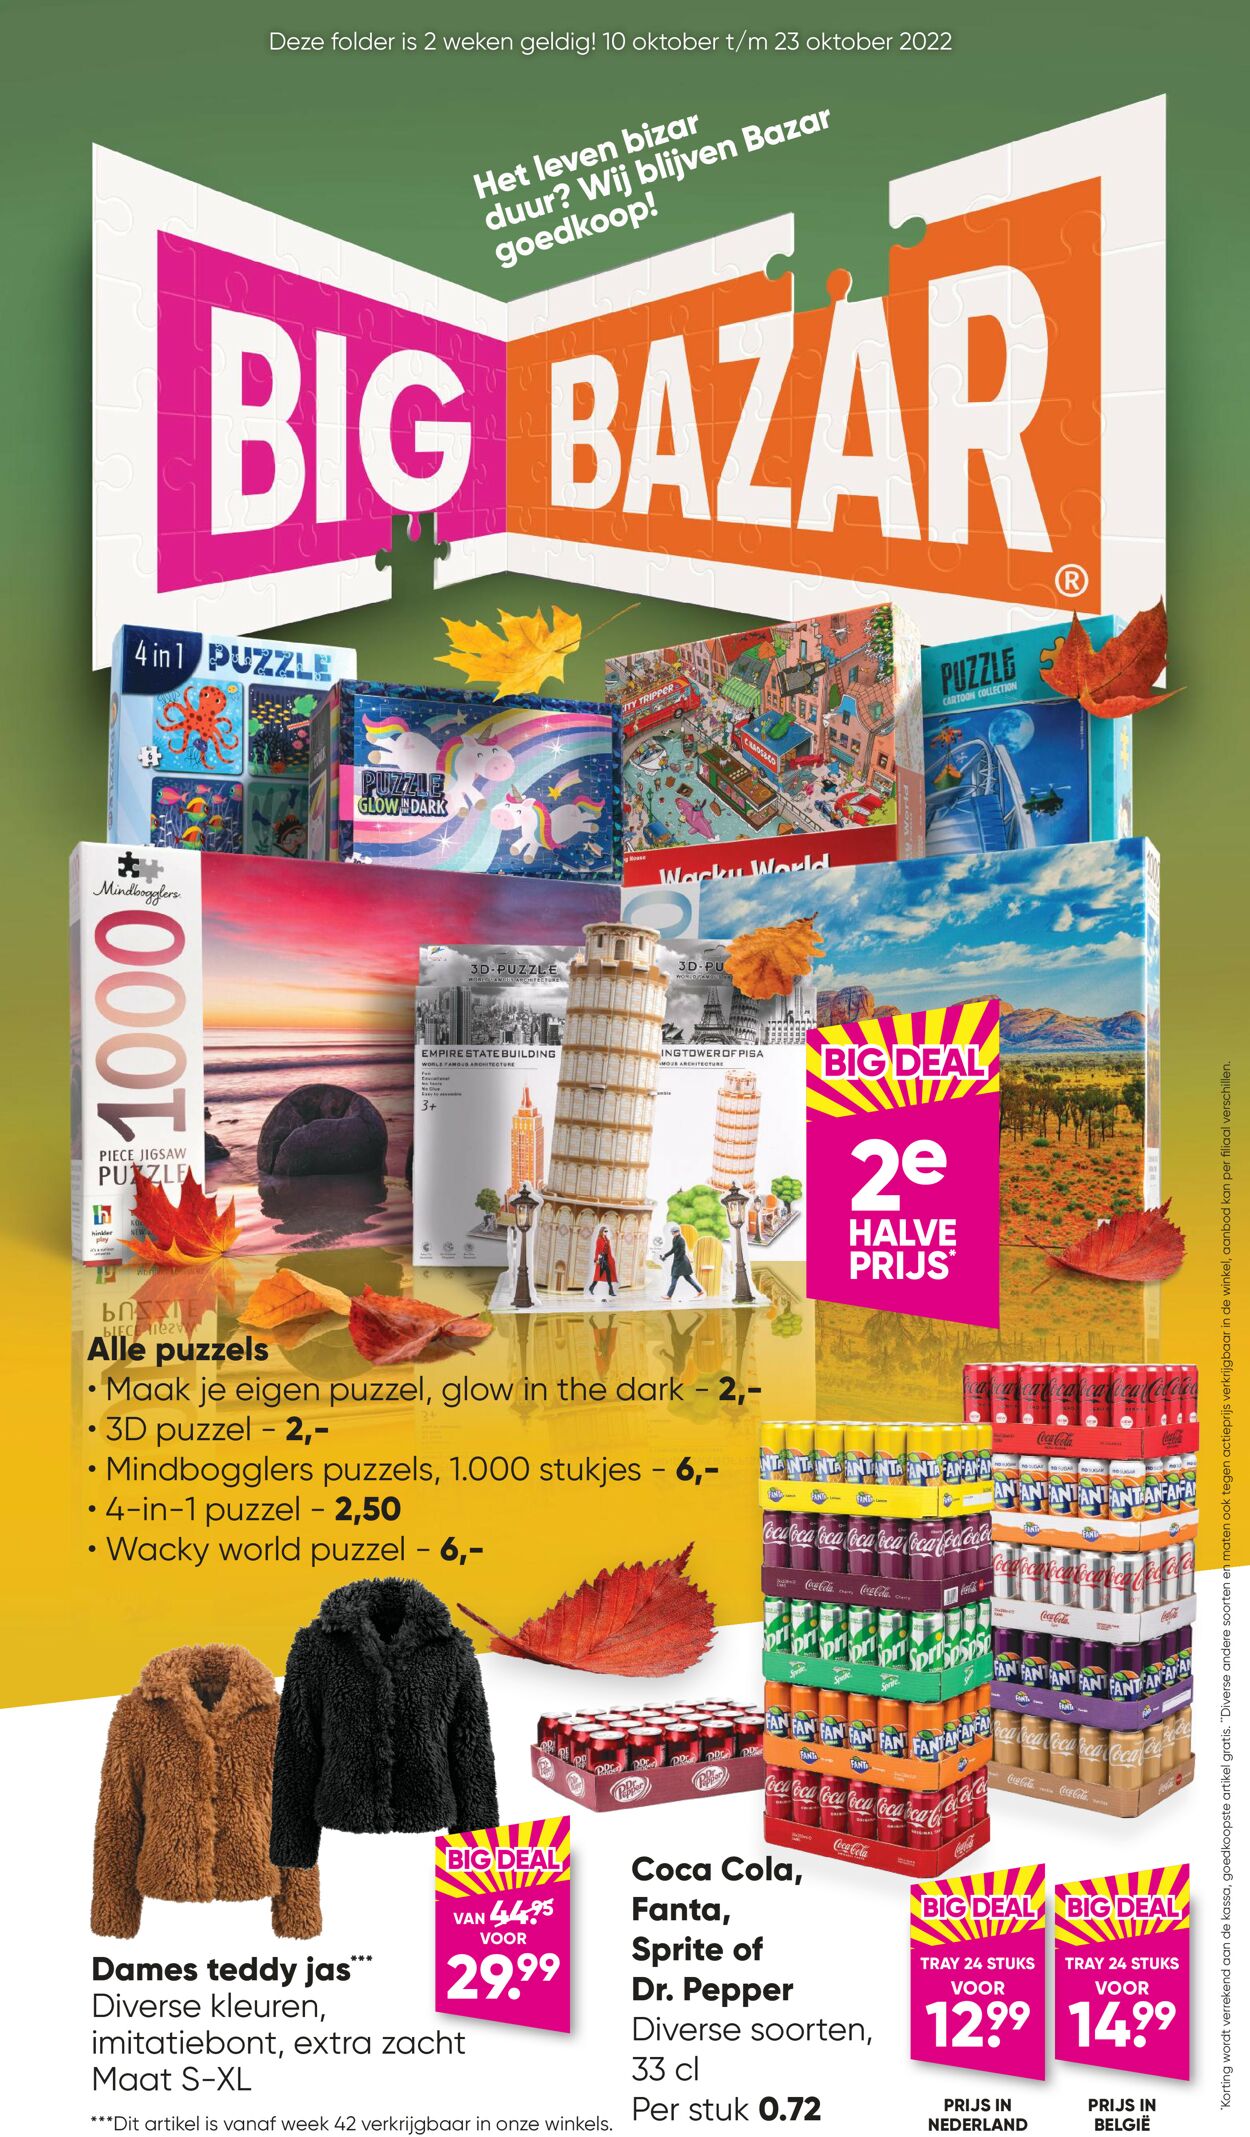 Catalogus van Big Bazar van 10.10.2022